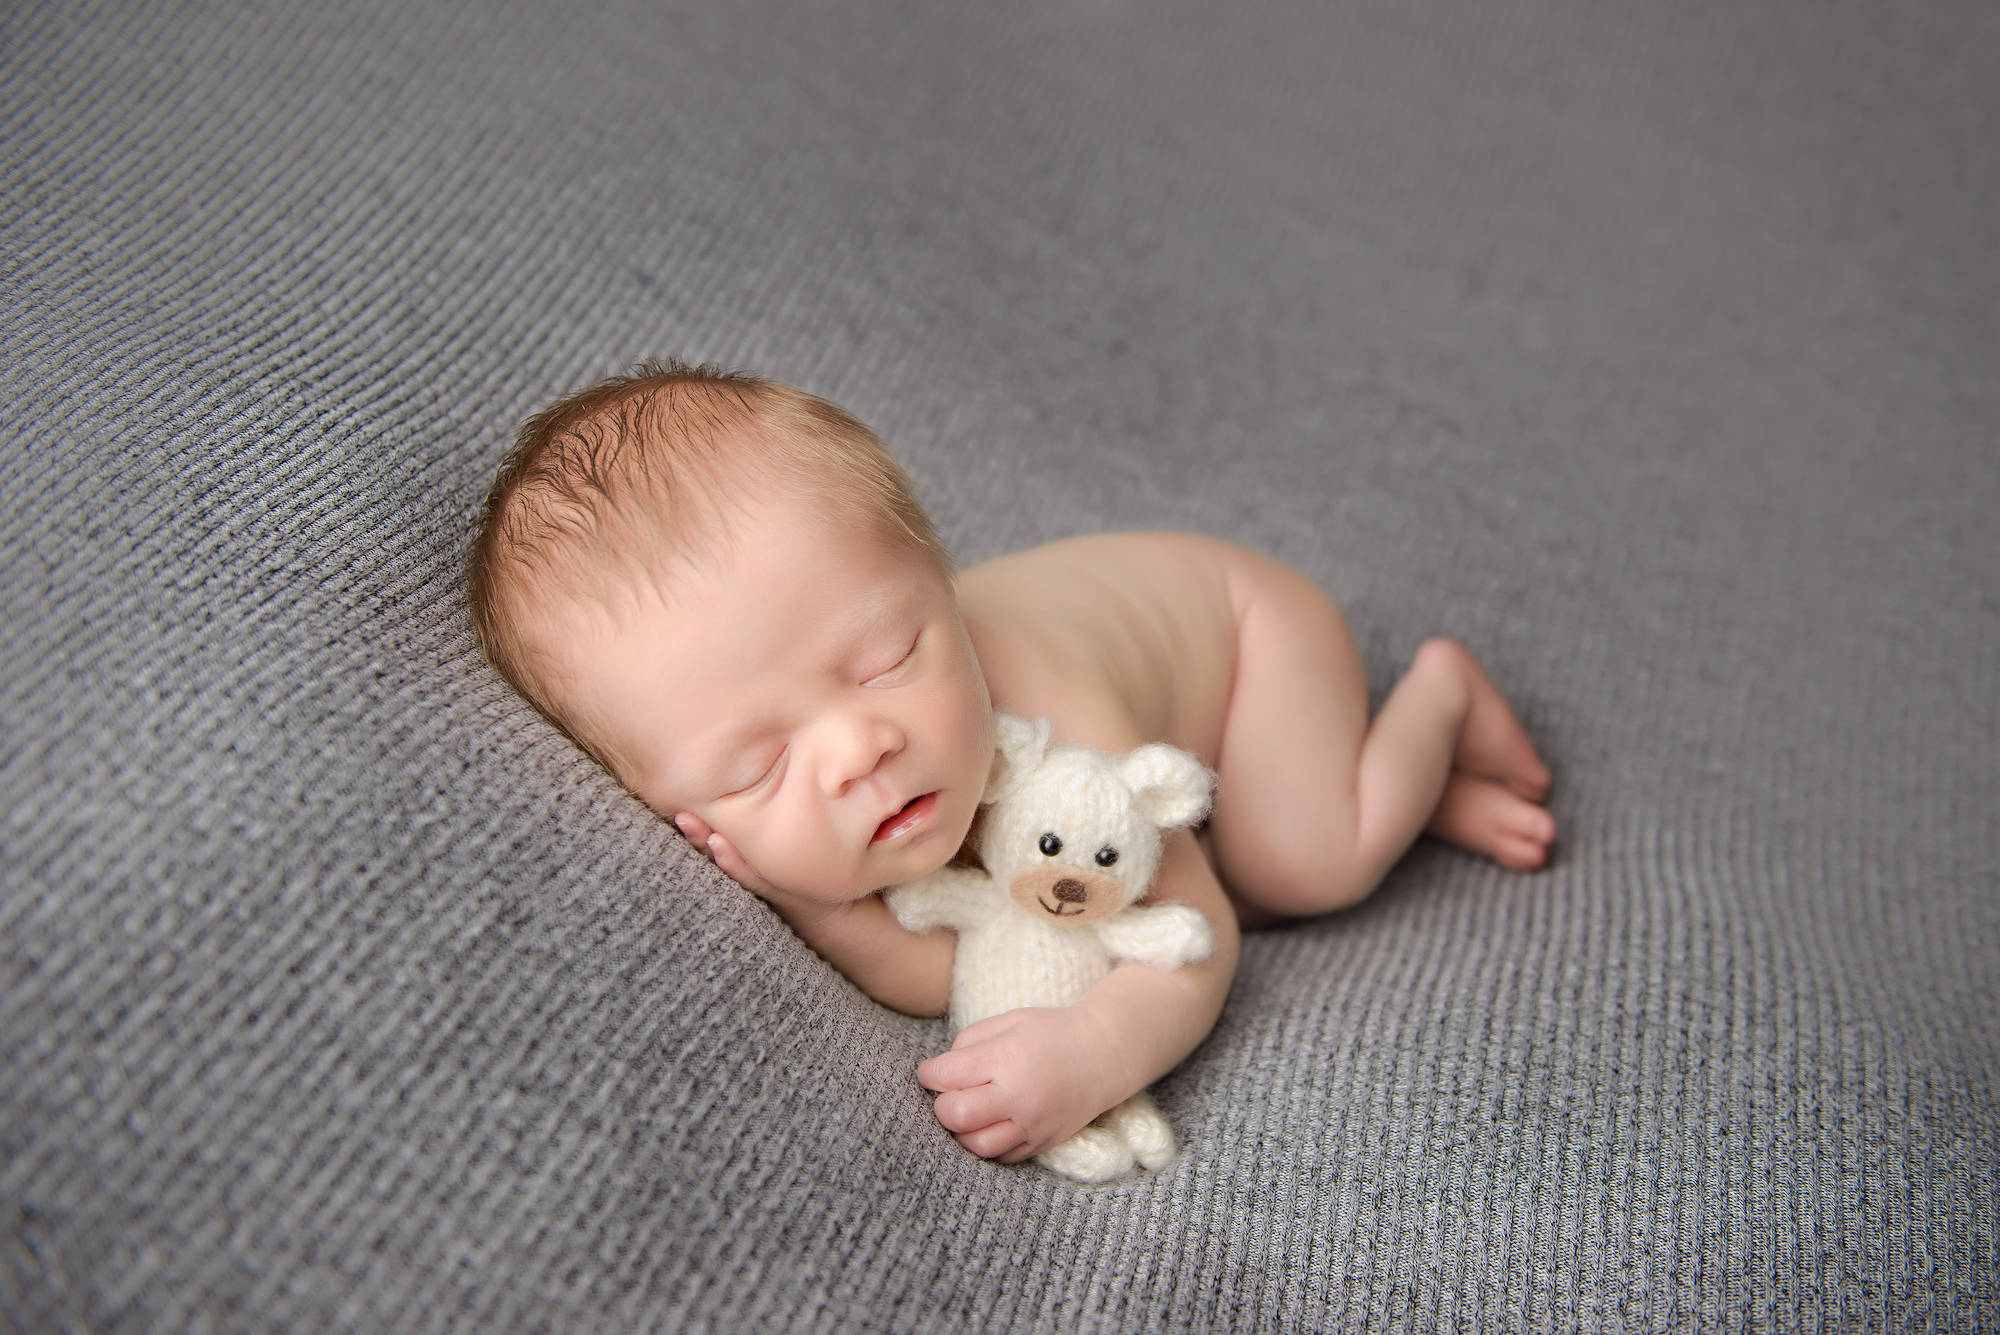 Newborn Photography Baby Sleeping With Teddy Bear